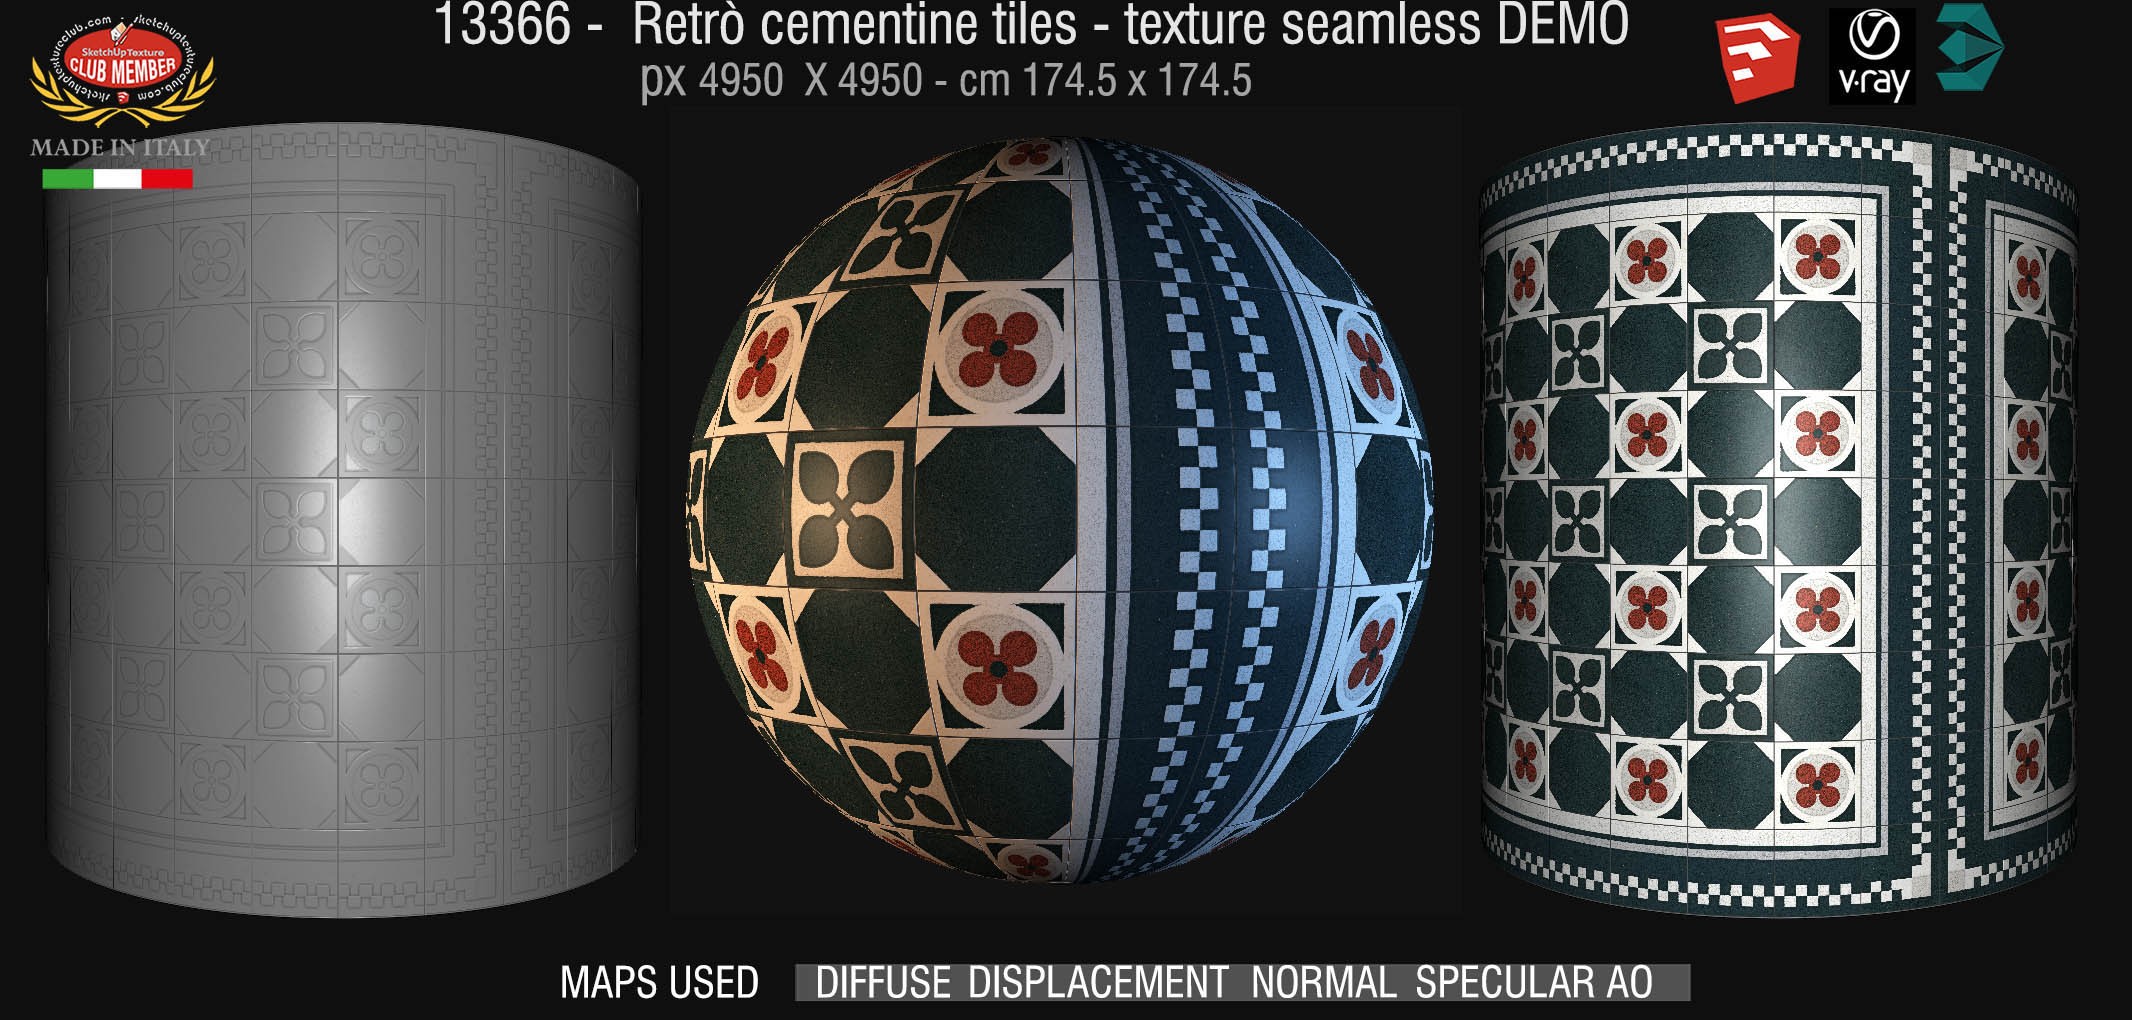 13366 retrò cementine tiles - texture seamless + maps DEMO